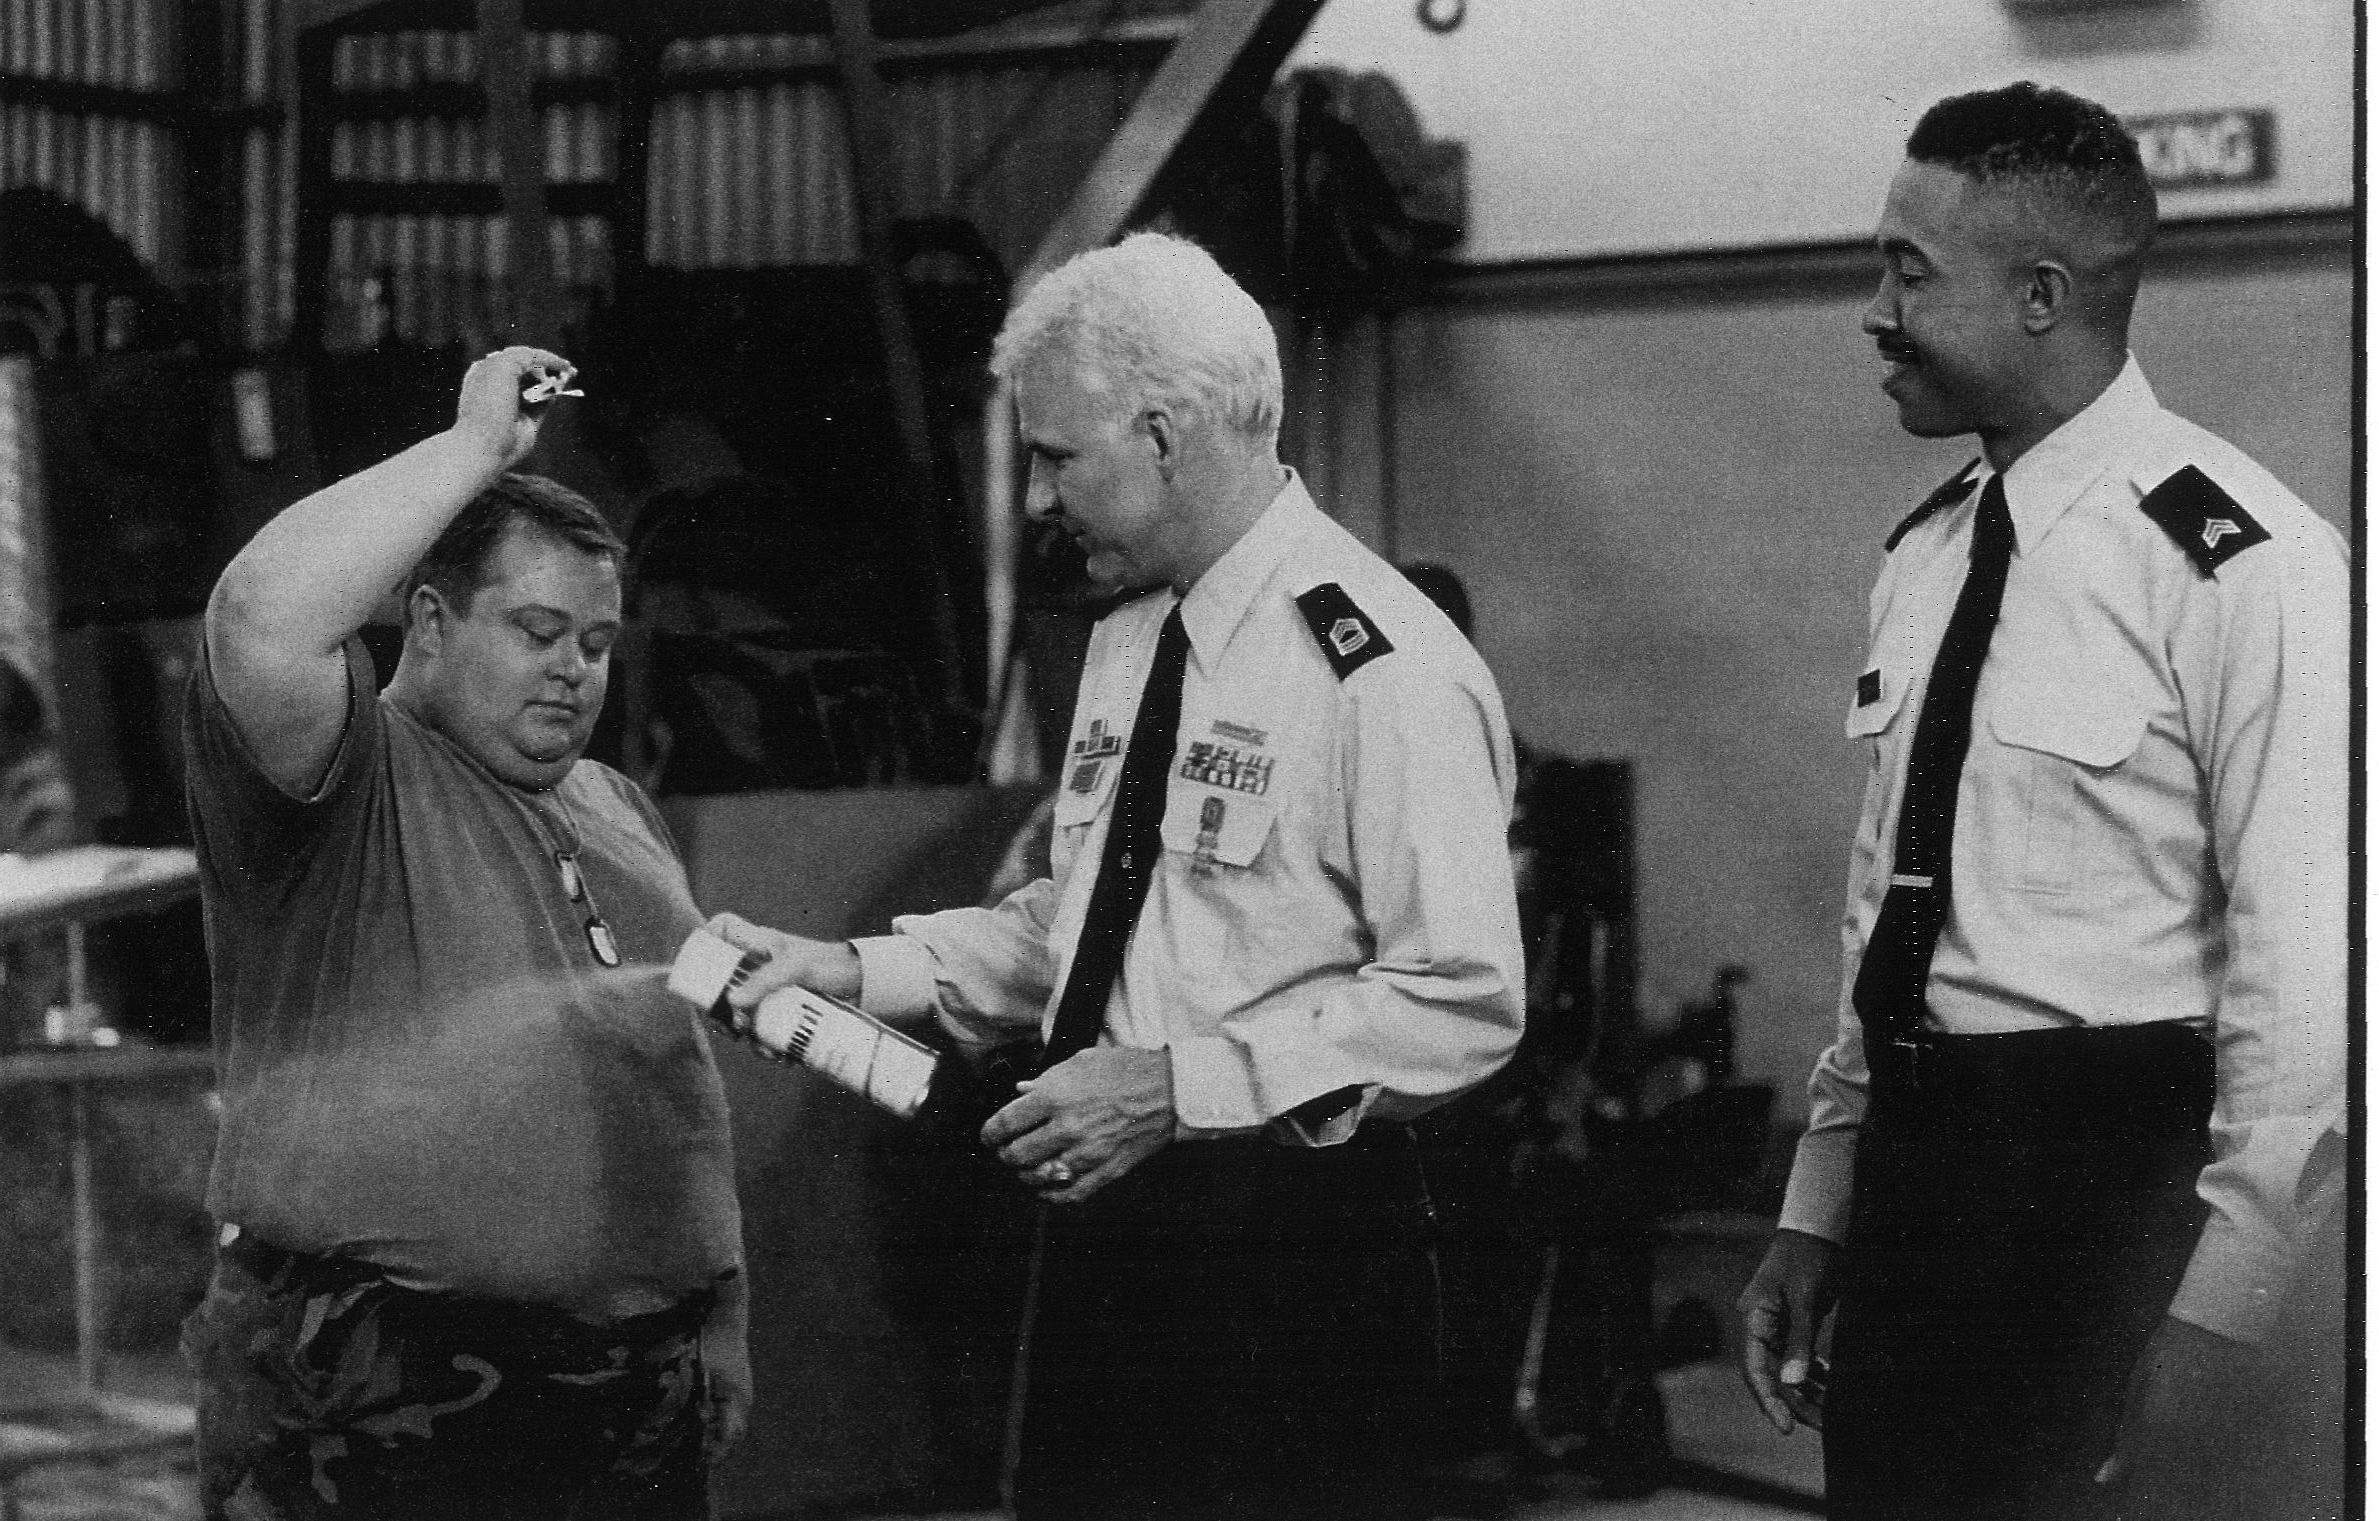 Eric Edwards as Pvt. Doberman, Steve Martin as Sgt. Bilko, and John Marshal Jones